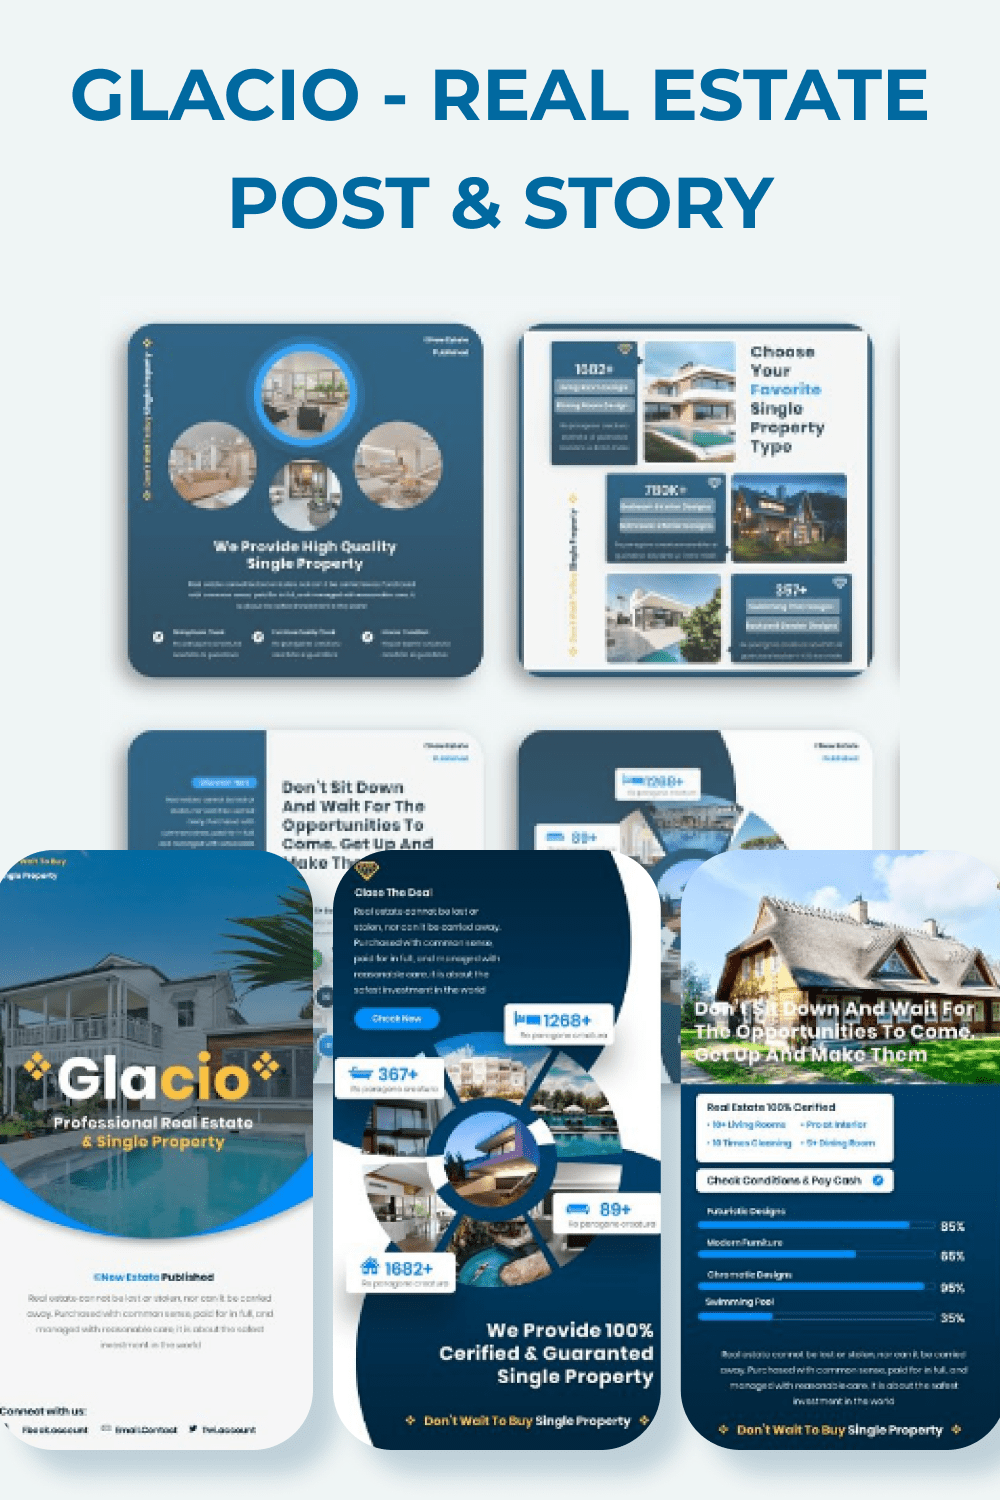 Glacio - Real Estate Post & Story Pinterest.